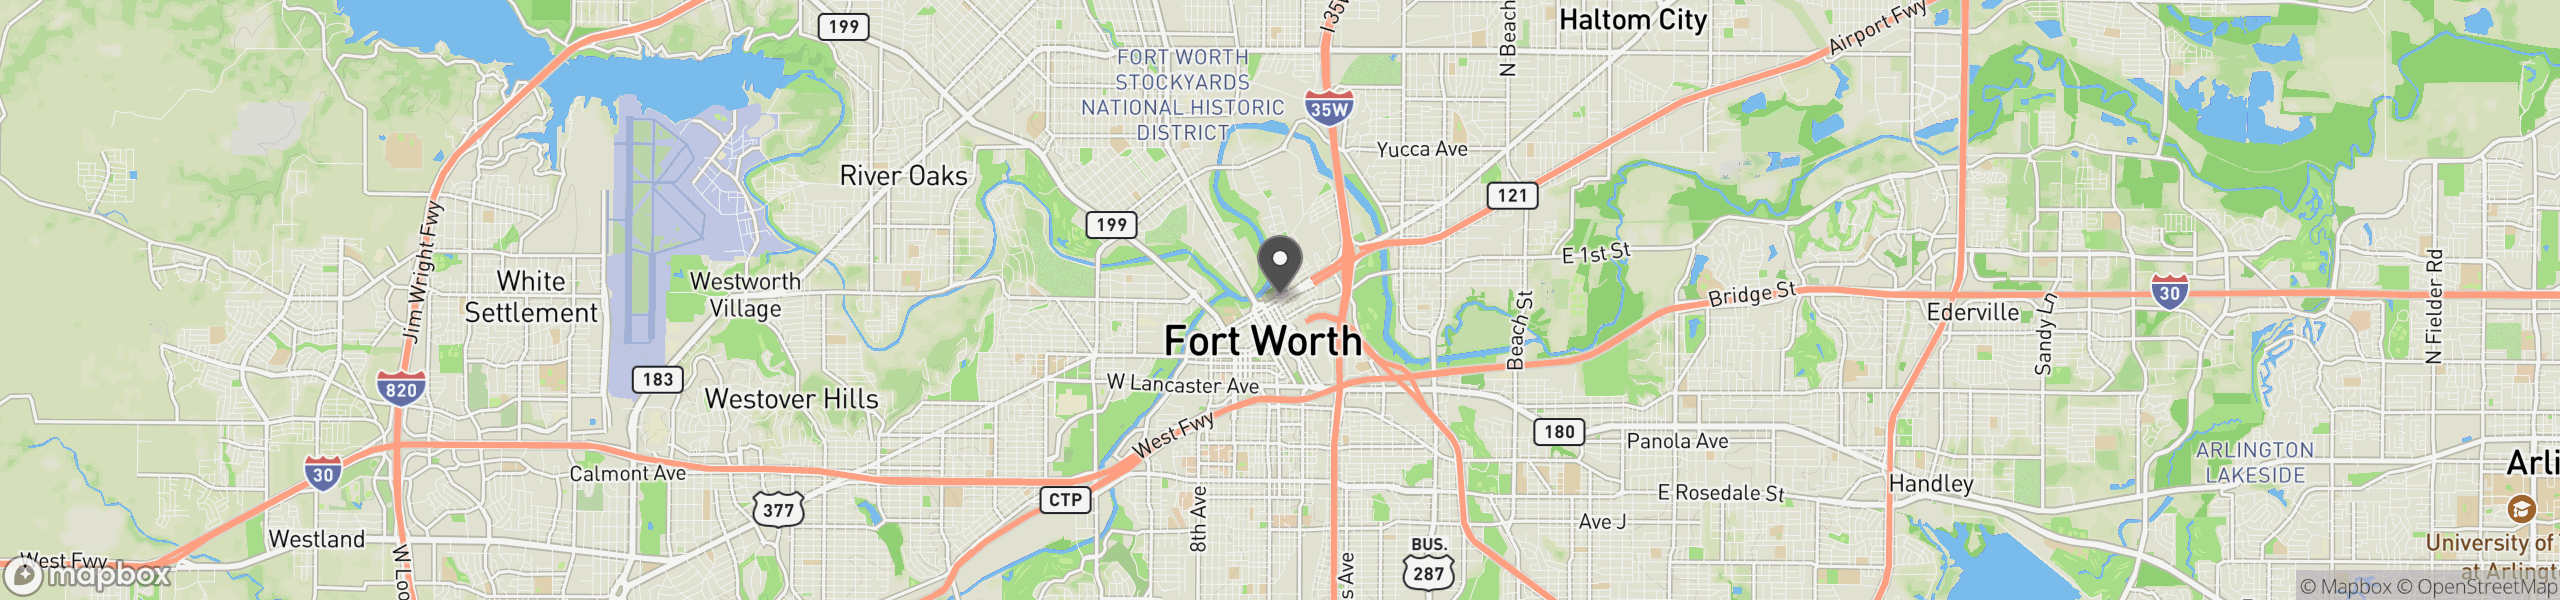 Fort Worth, TX 76102